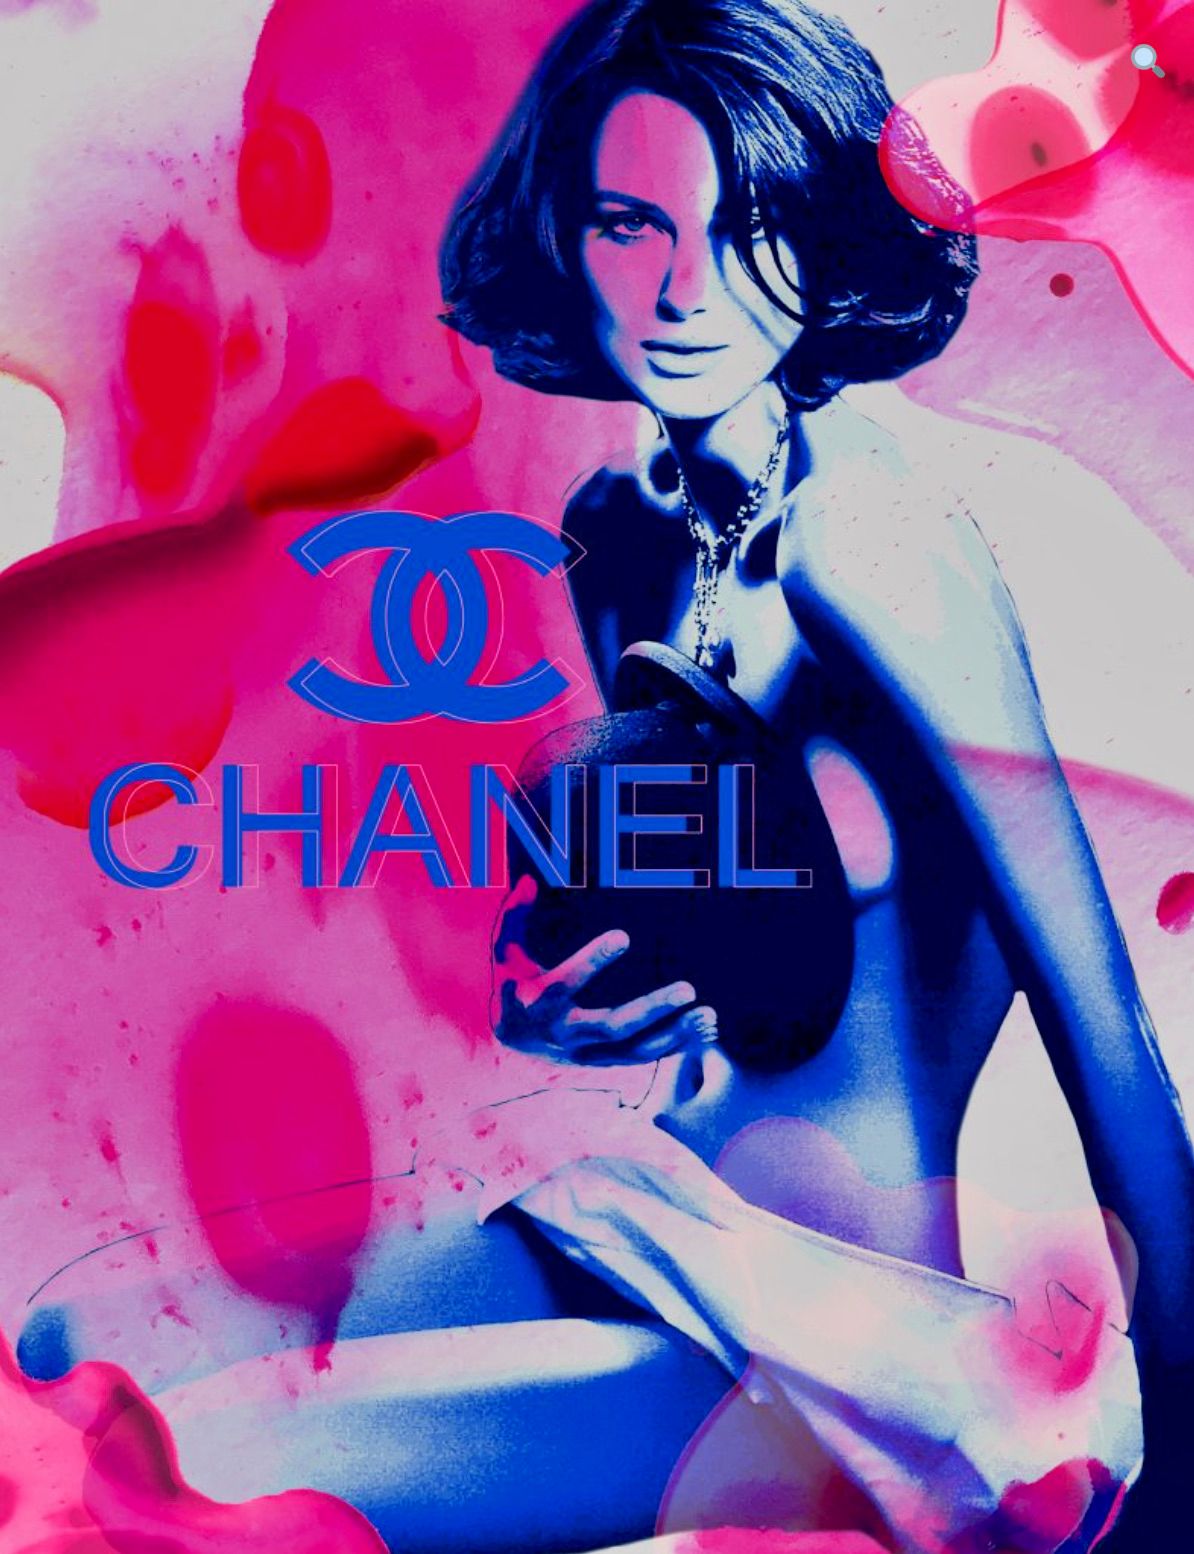 Nathali von Kretschmann collage abstracto Keira Knightley nude superposición logo Chanel color rosa